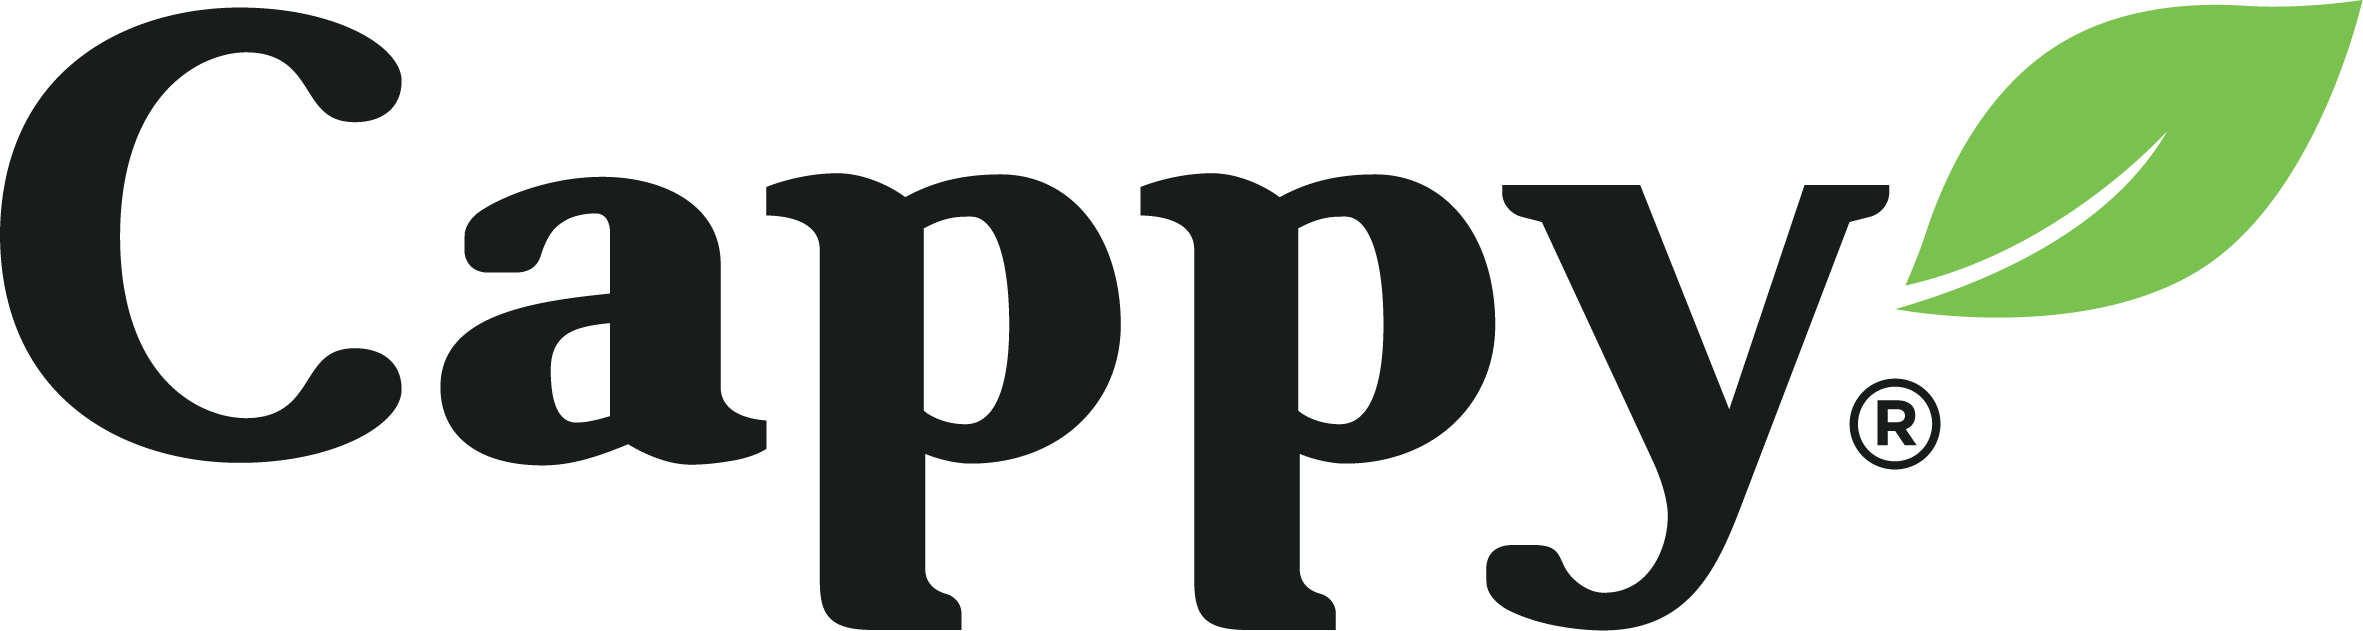 Cappy logo 2020